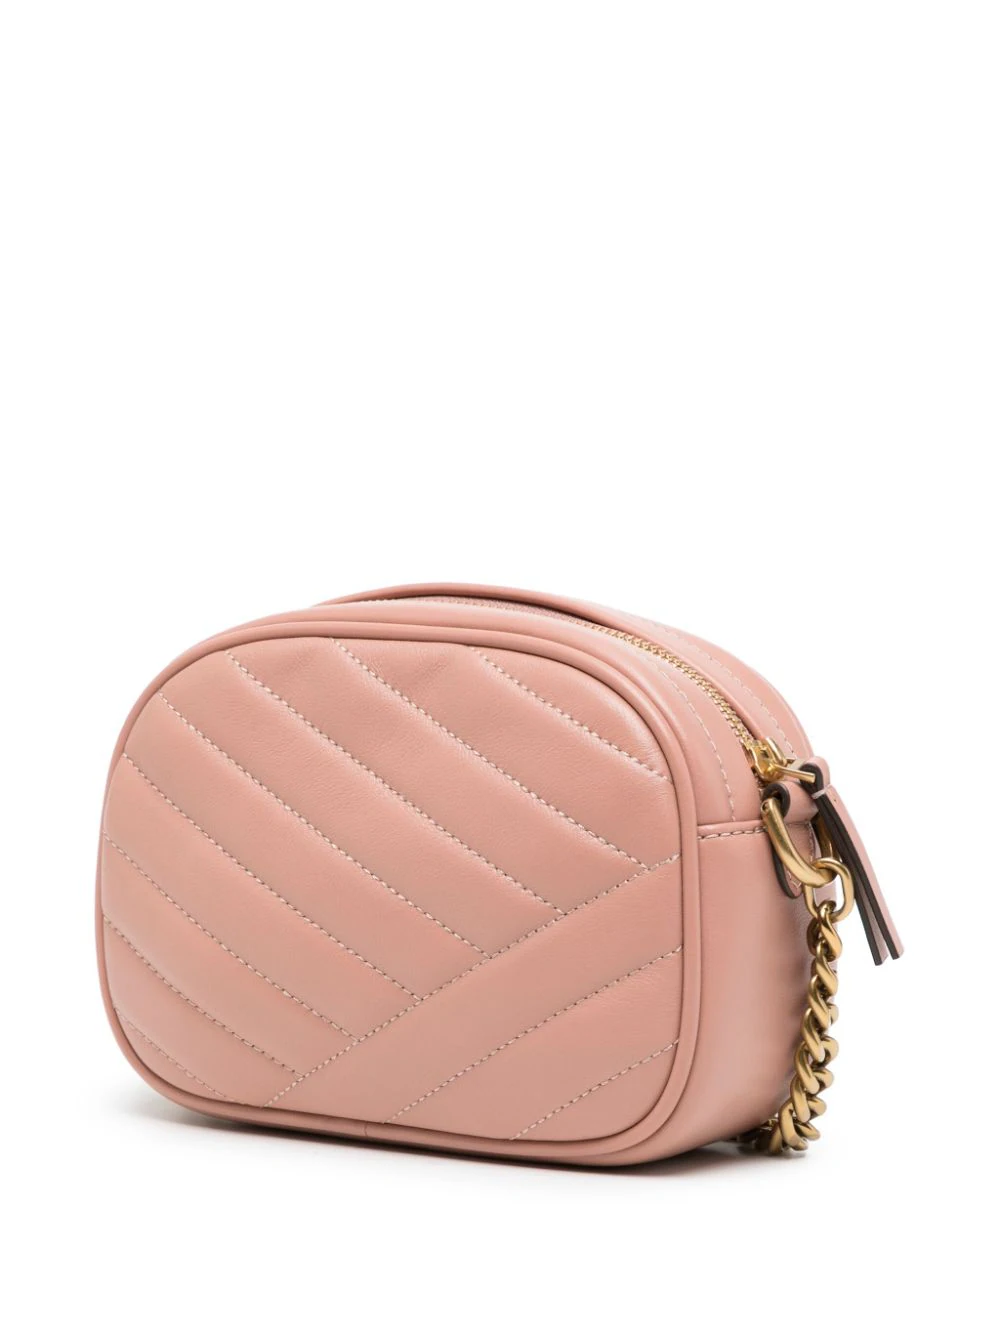 Tory Burch Kira Pebbled Small Convertible Shoulder Bag in Pink